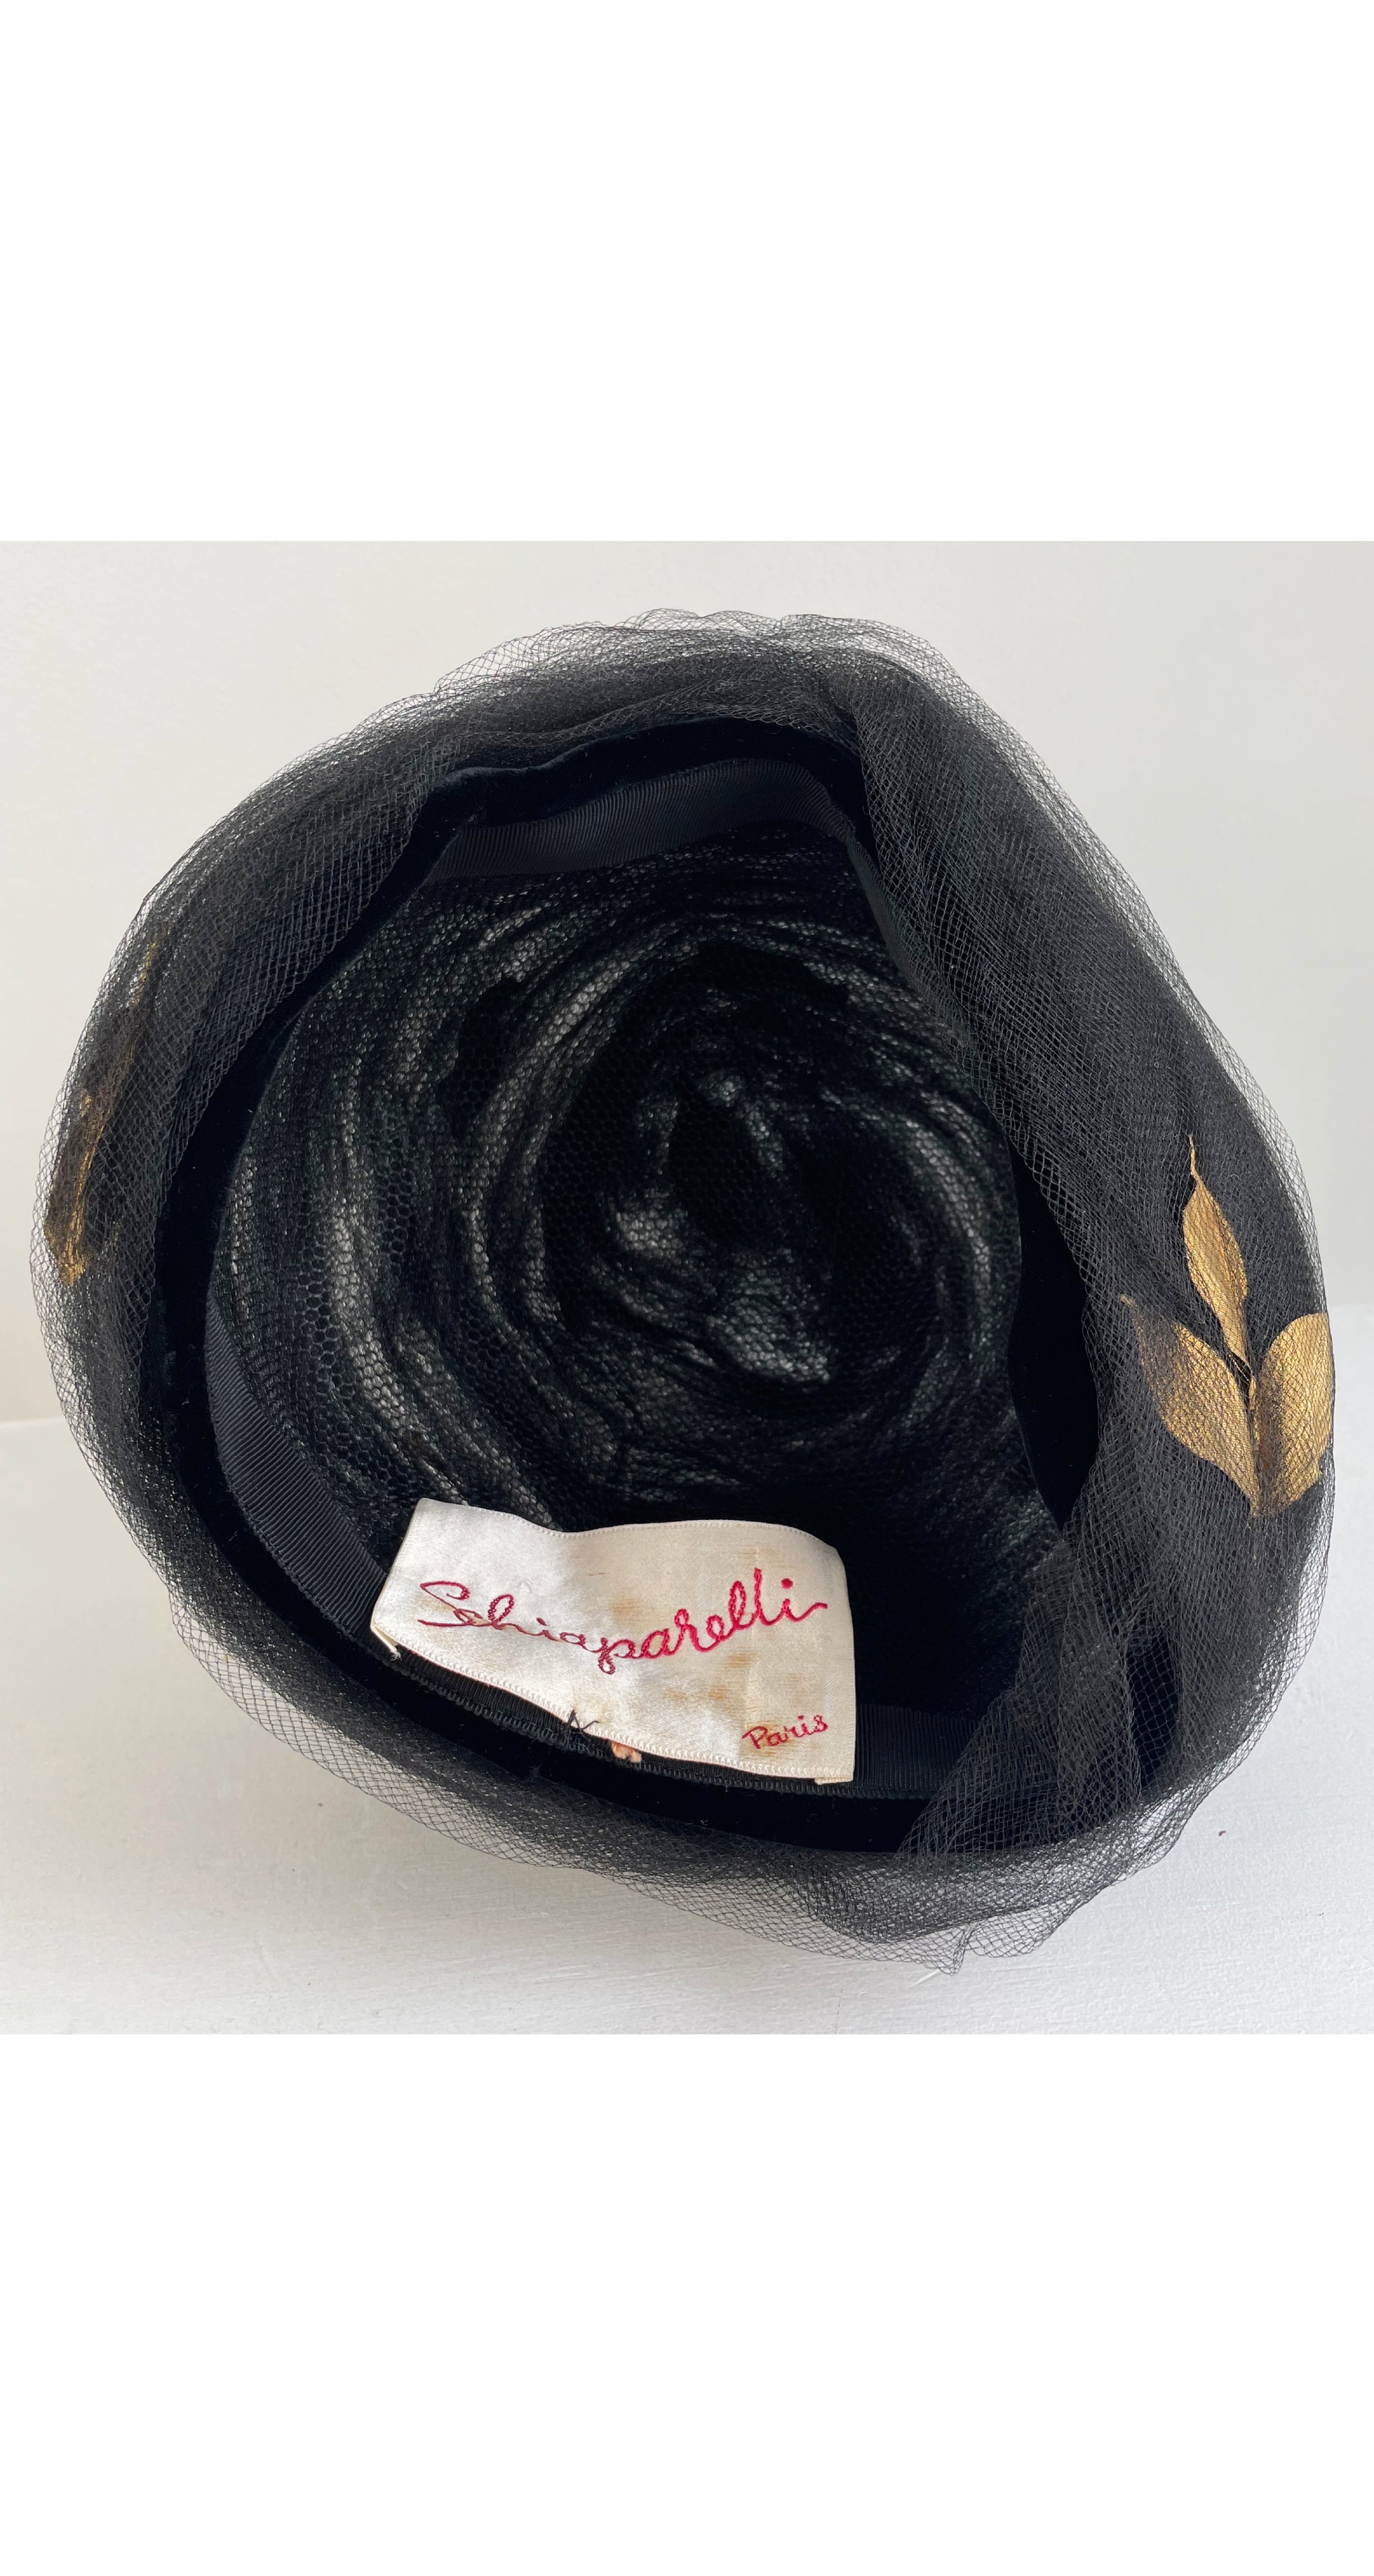 1960s Gold Leaf Black Netted Turban